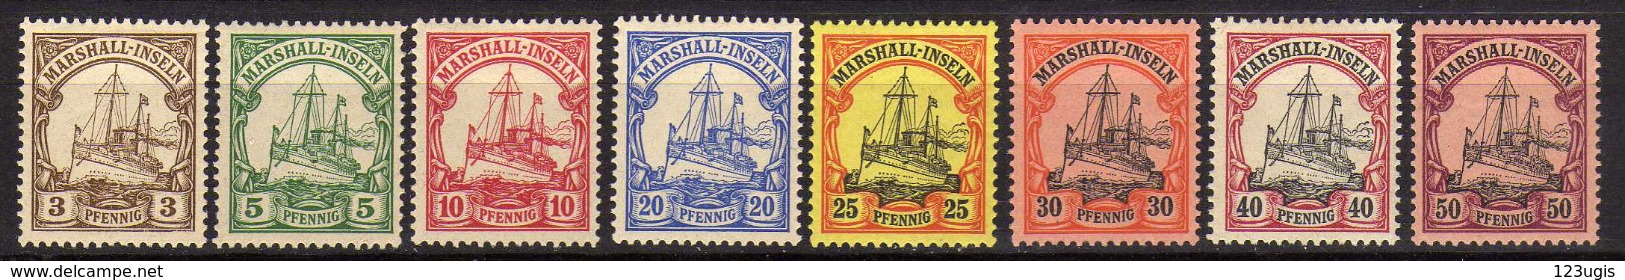 Deutsche Kolonien, Marshall-Inseln Mi 13-20 * [170317L] - Marshall Islands